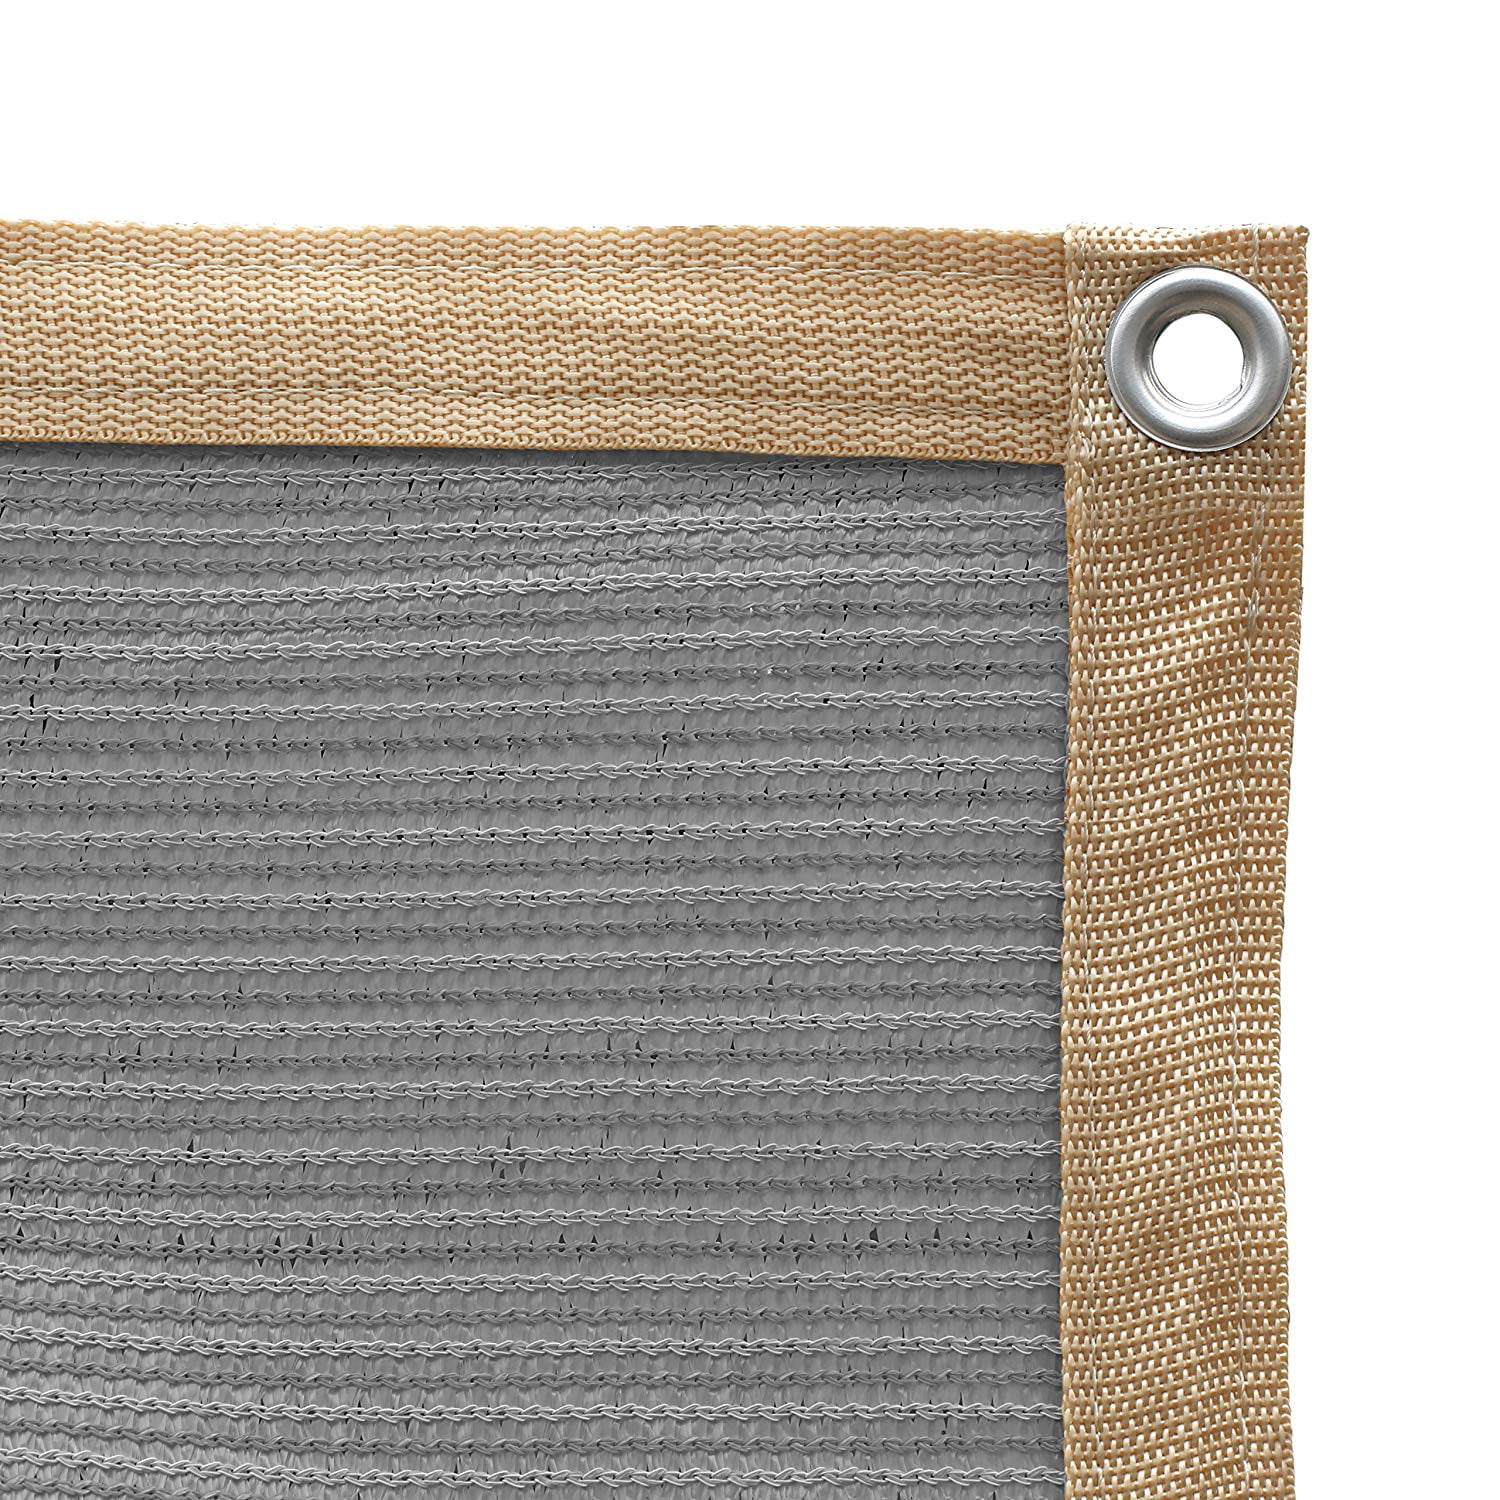 Shatex Shade Fabric For PergolaPatioGarden New Design Shade Panel